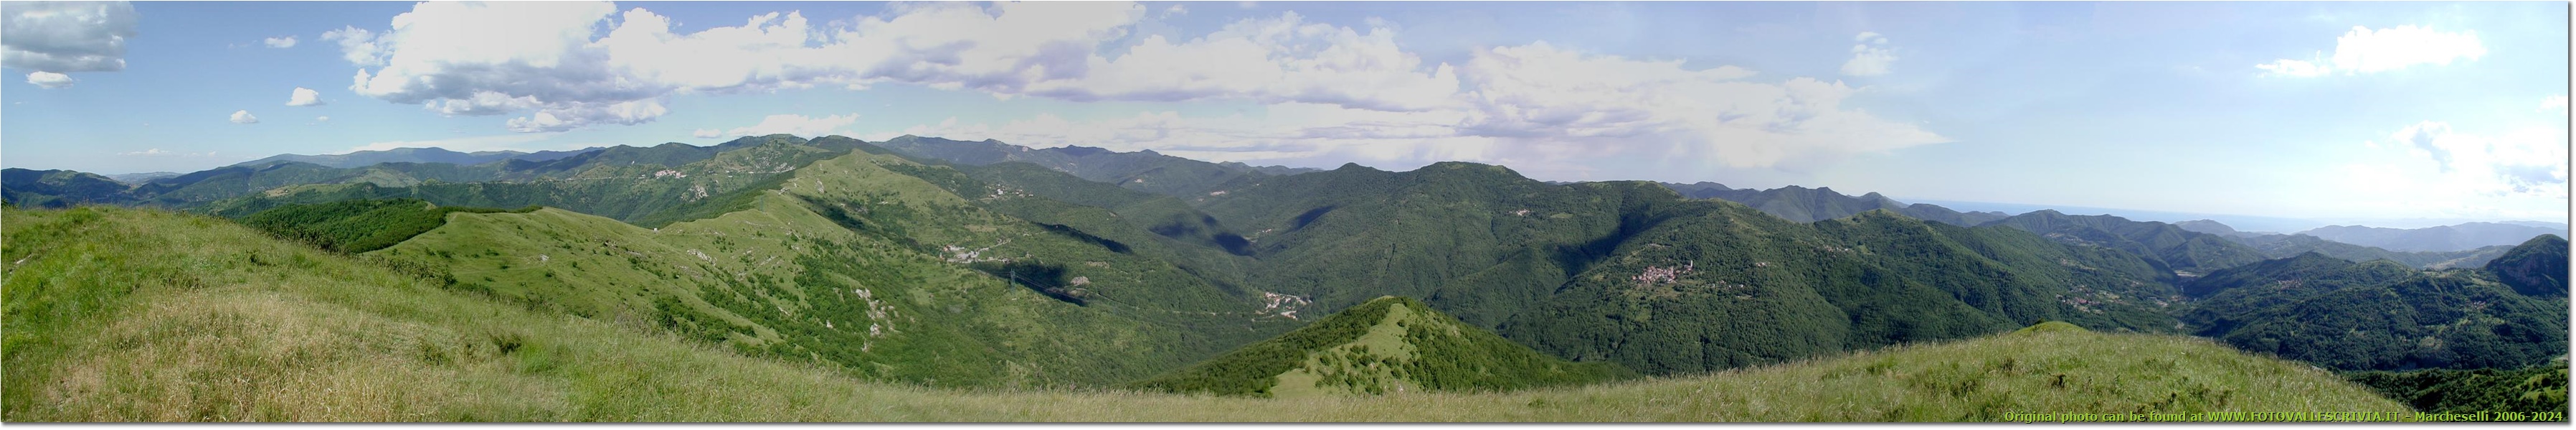 La Val Brevenna dal Monte Proventino - ValBrevenna - <2001 - Panorami - Estate - Olympus Camedia 3000